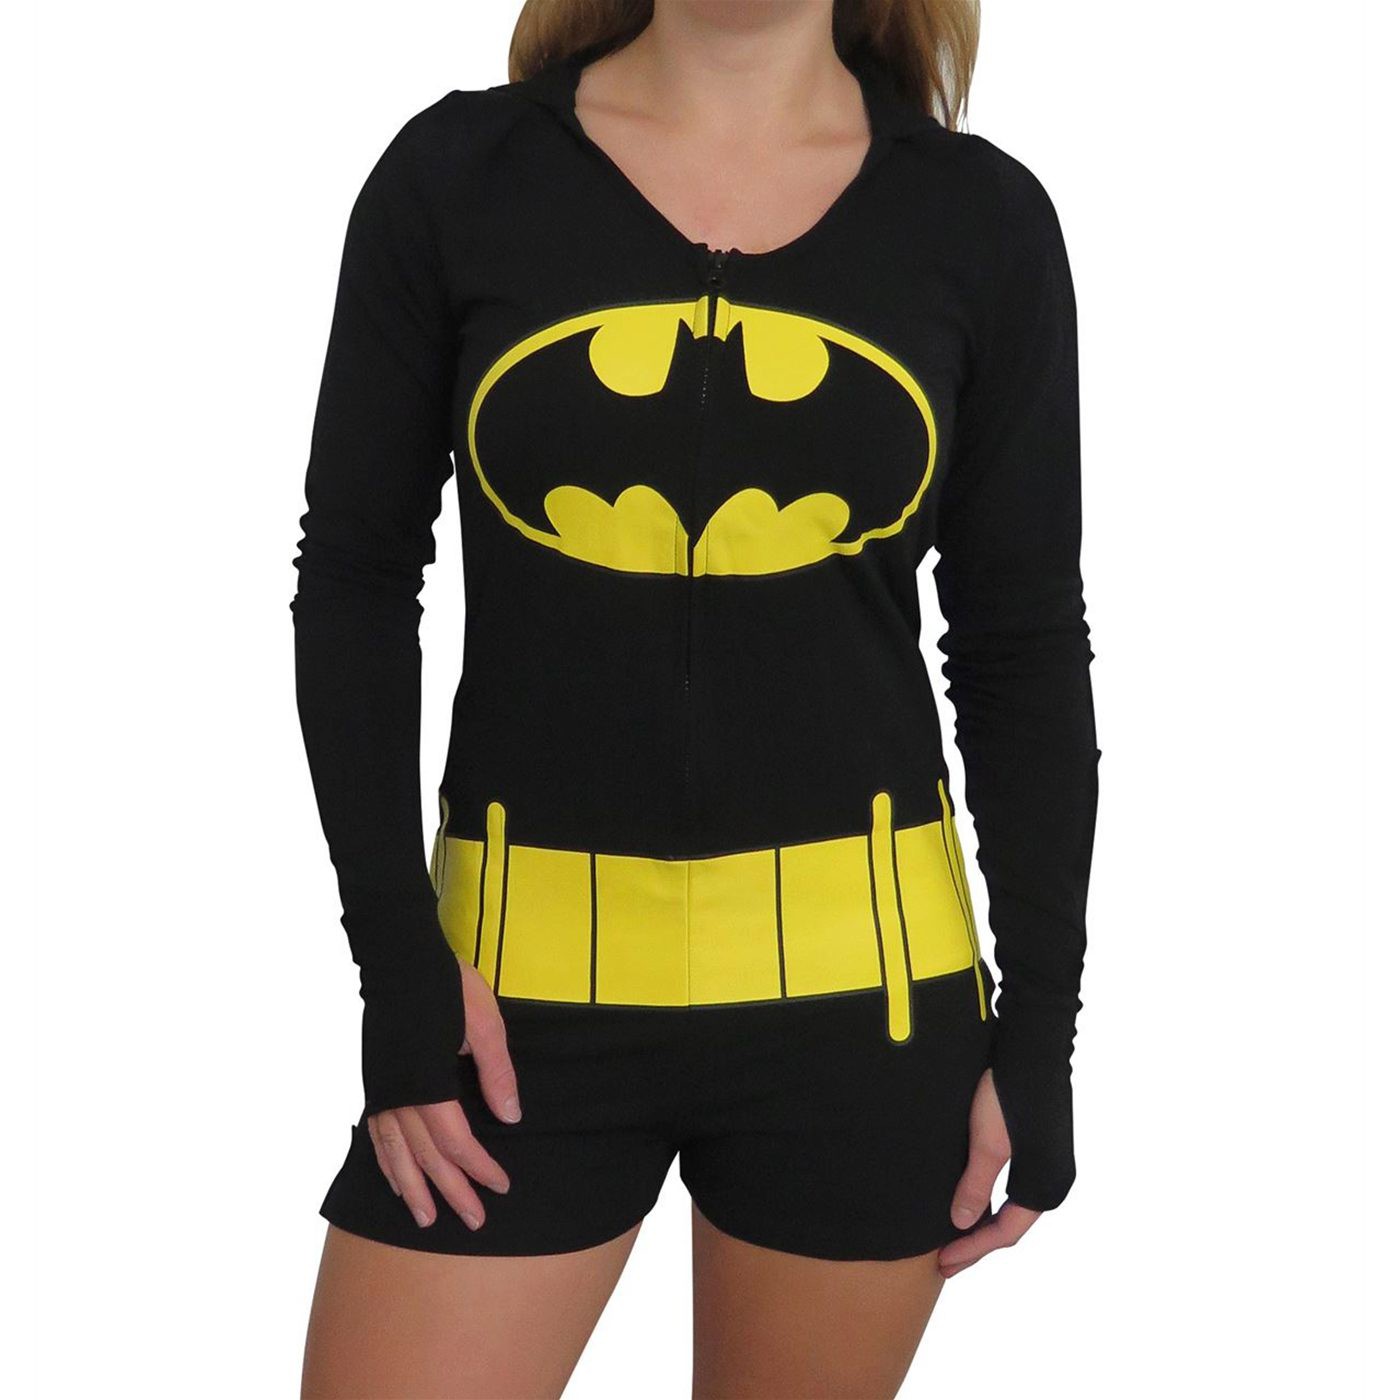 Девушка в футболке Бэтмена. Футболка с Бэтменом. Пижама Бэтмен женская. Костюм Бэтмена женский.